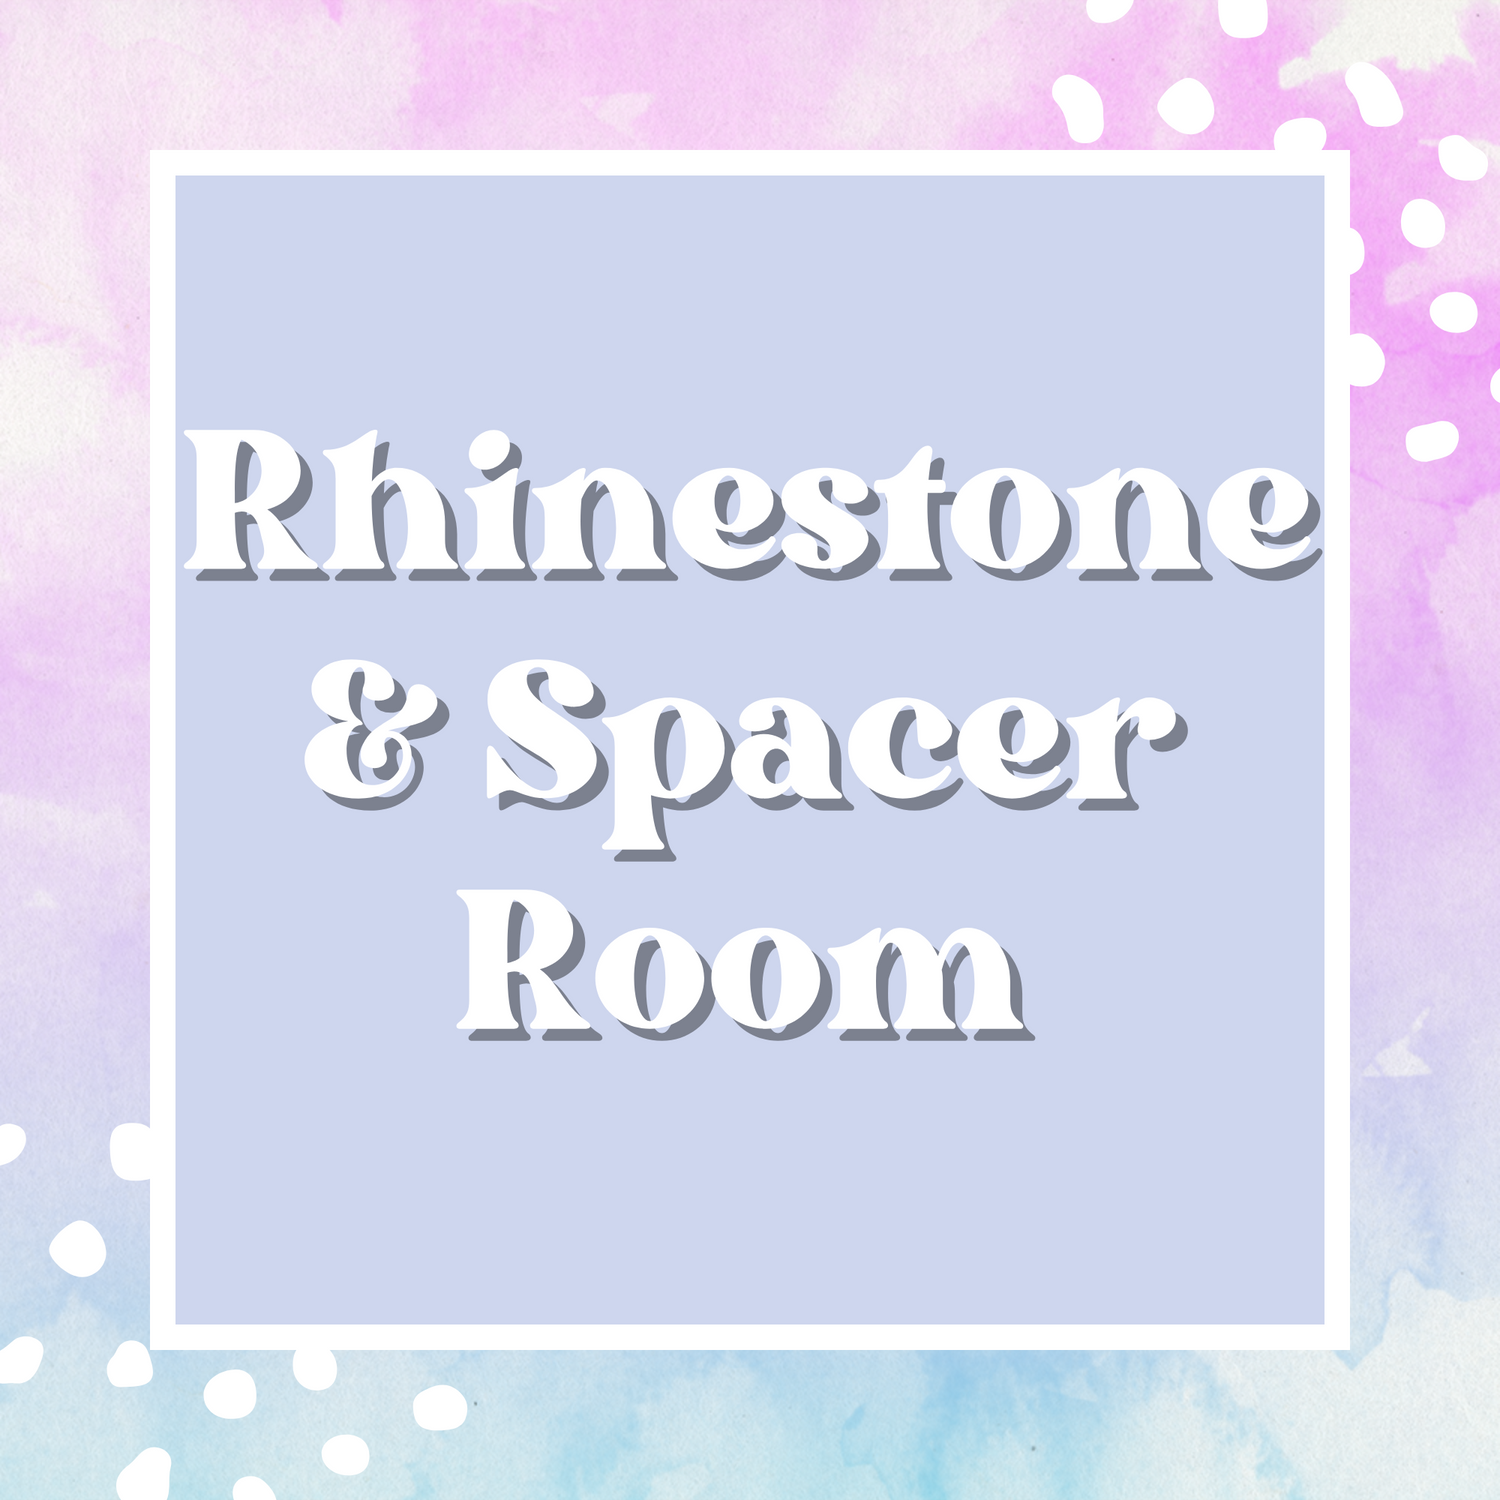 Rhinestone & Spacer Room